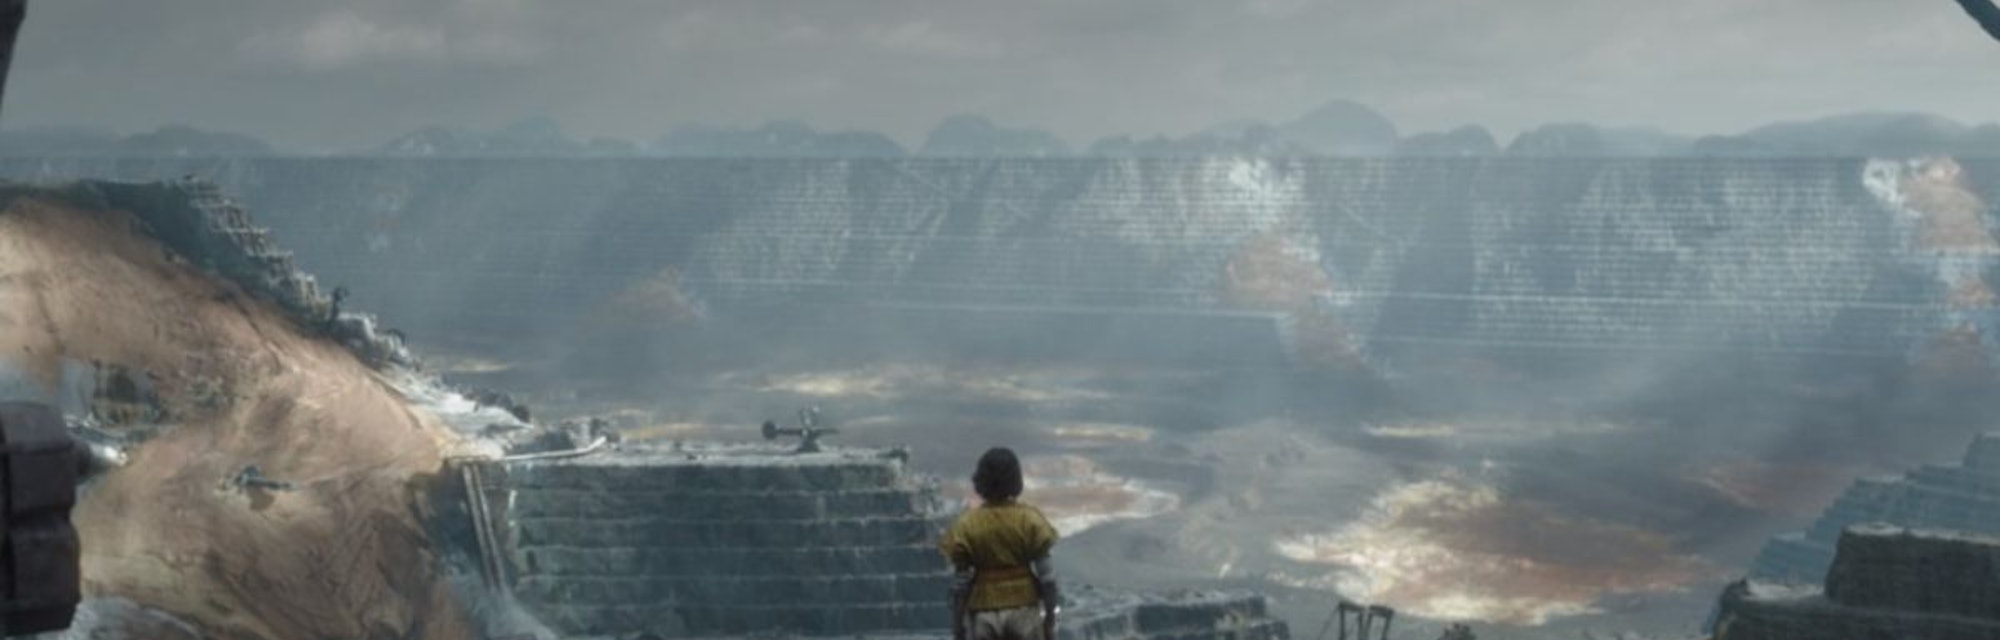 Screenshot of a desolate landscape from the tv show Andor.